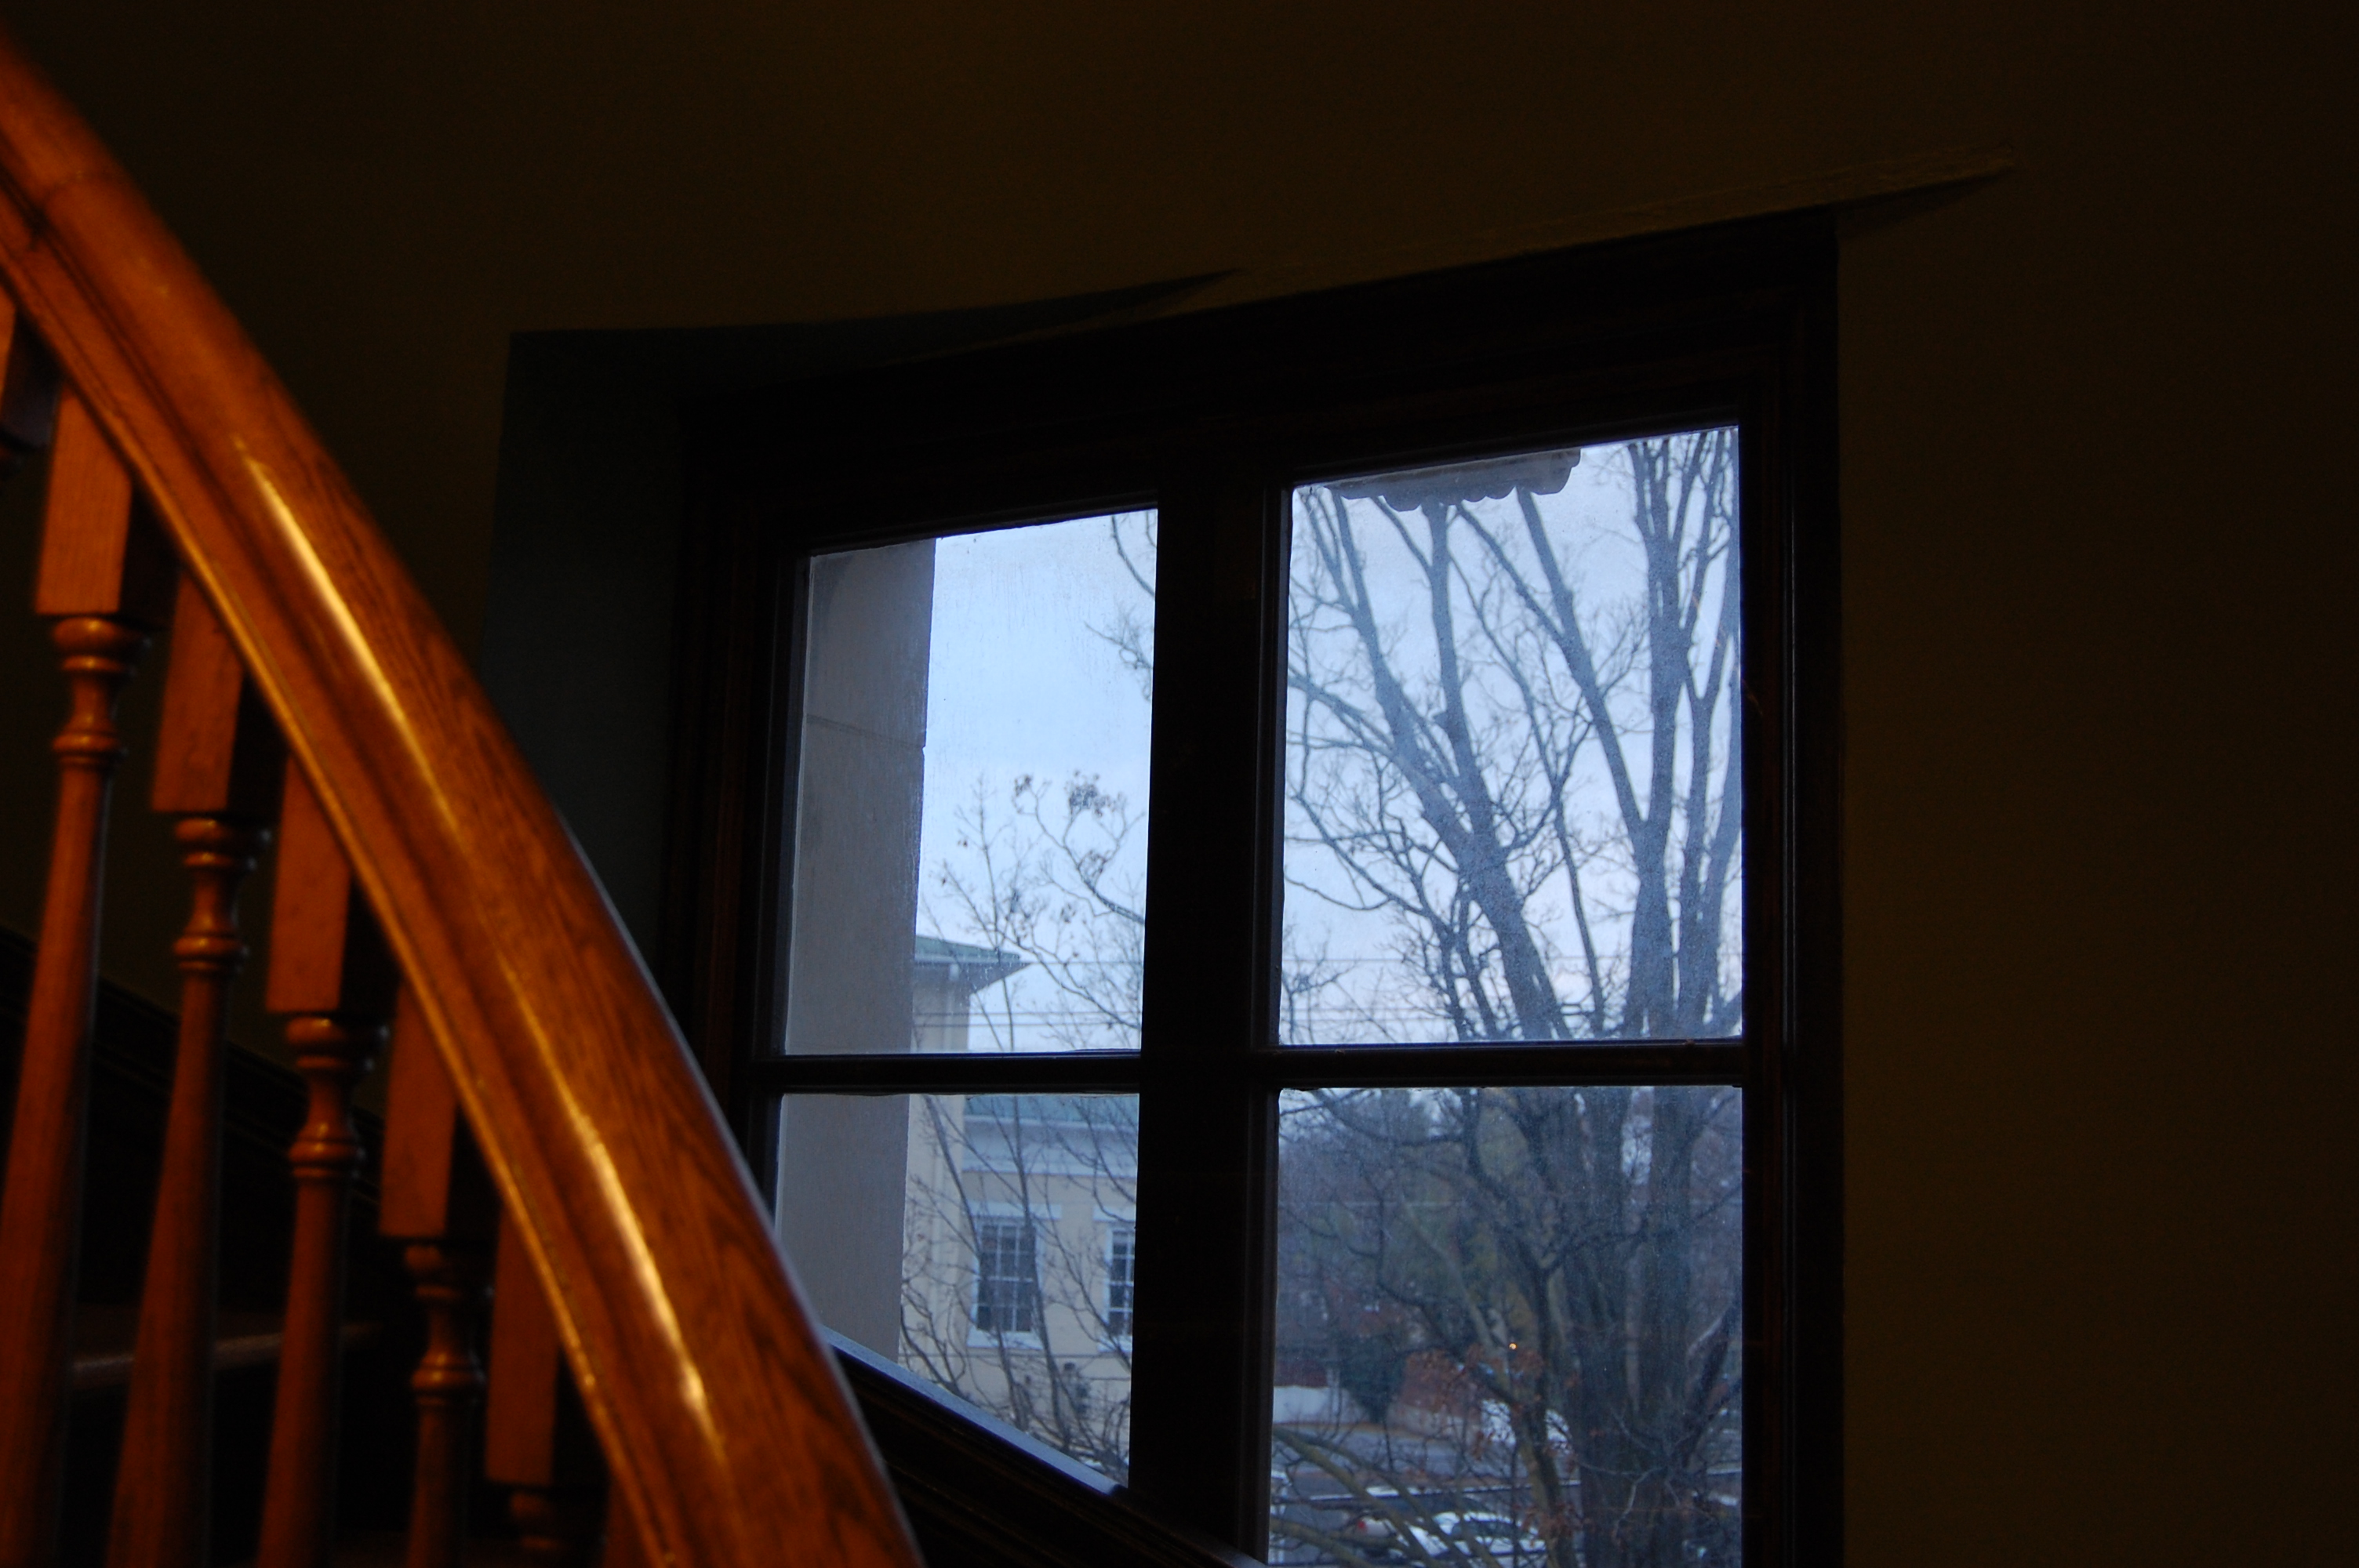 Stair Rail and Window: Photo by Sharon Burtner